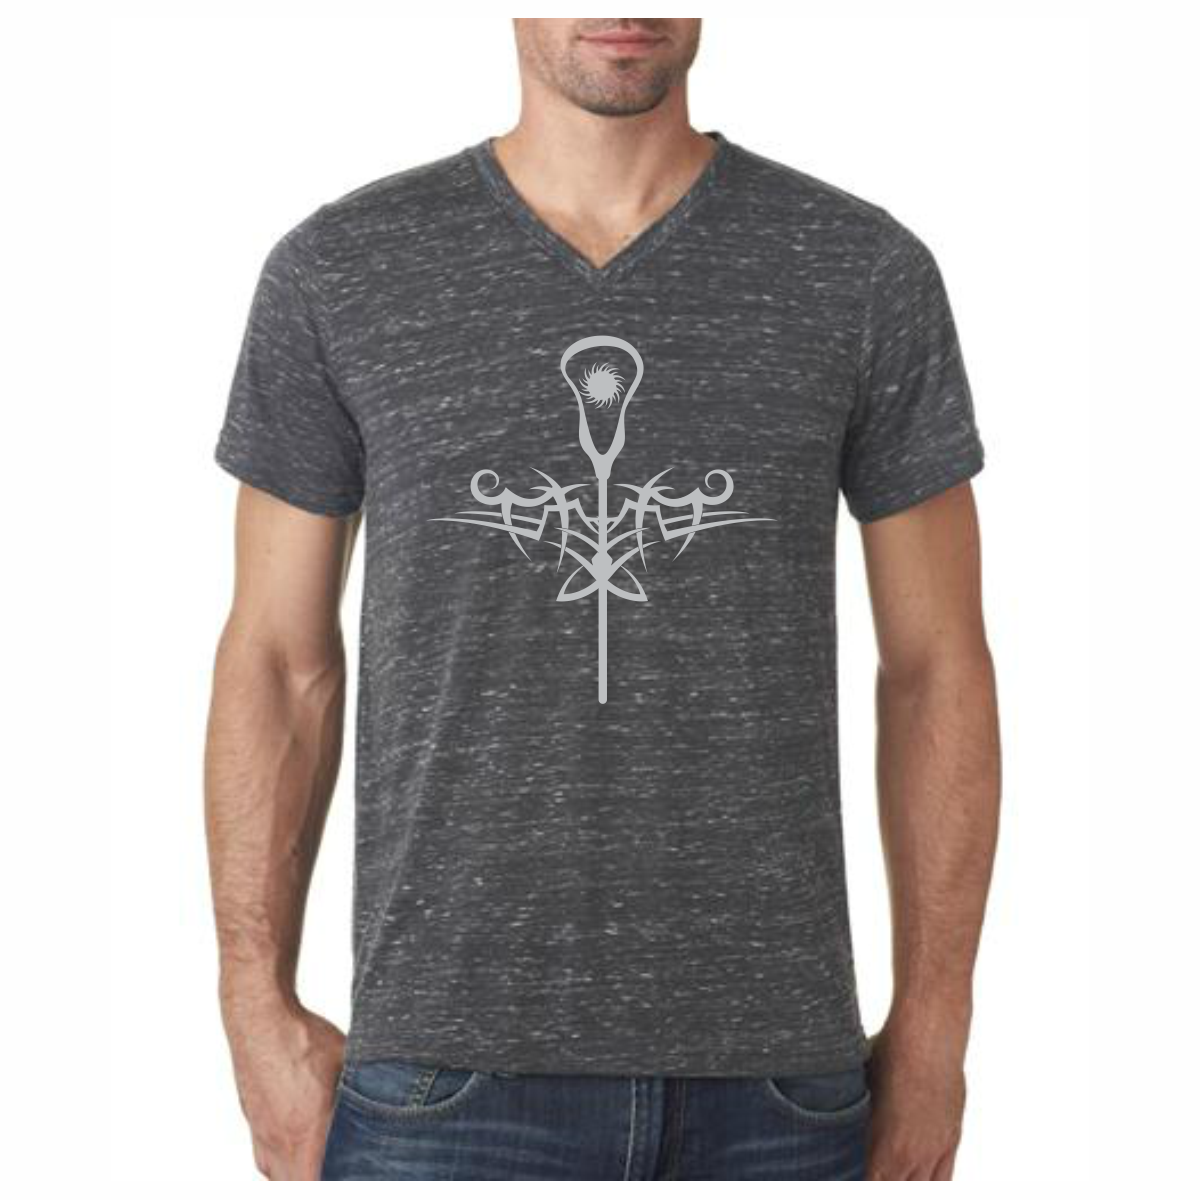 Lacrosse T Shirt Tattoo